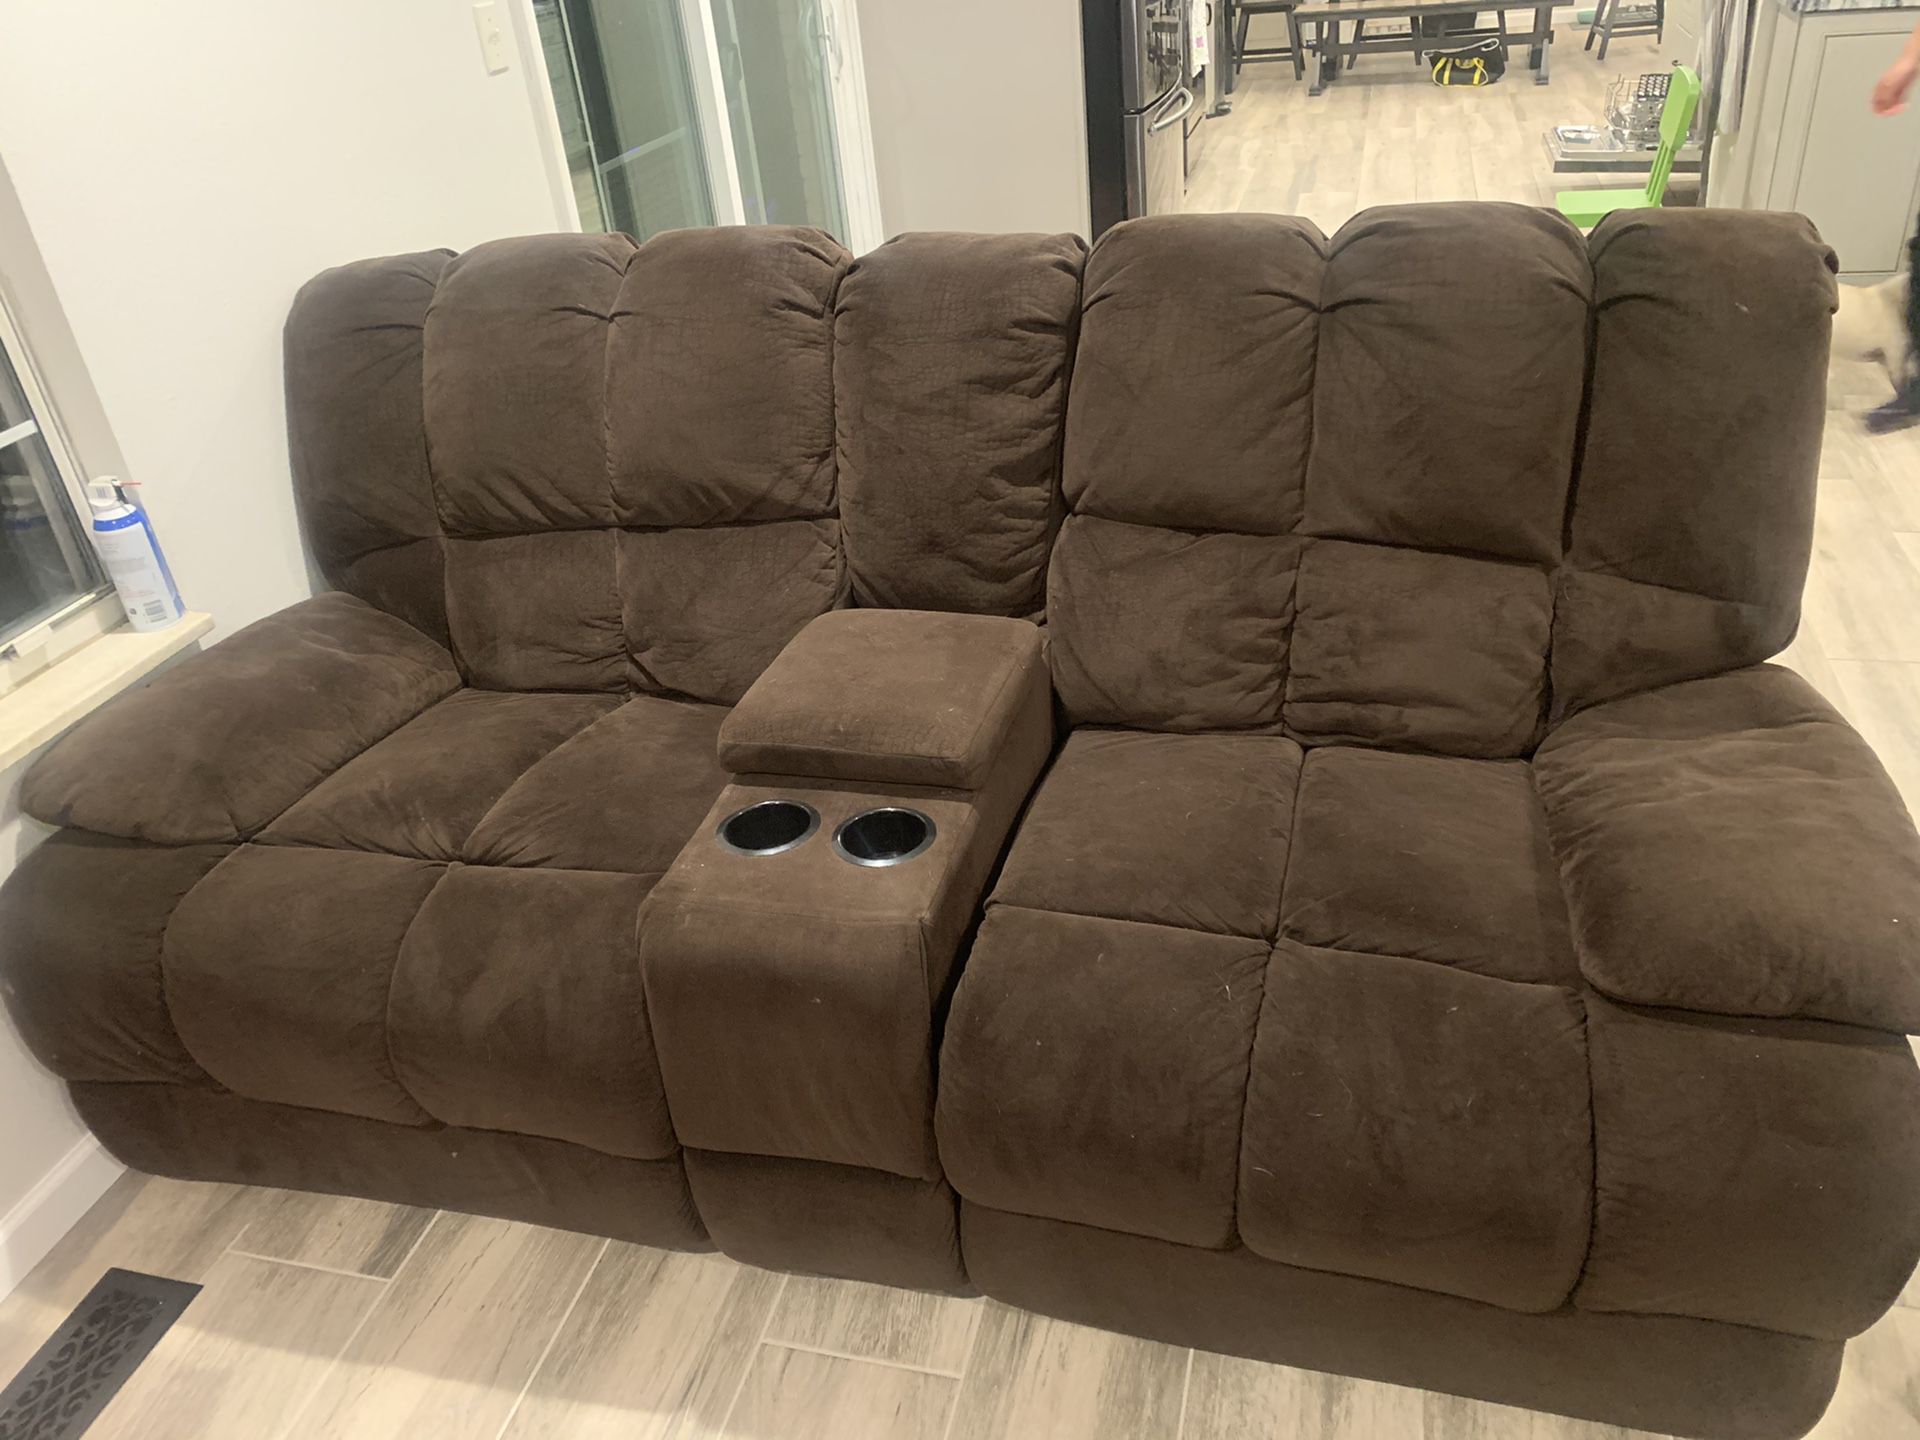 6 piece reclining living room set